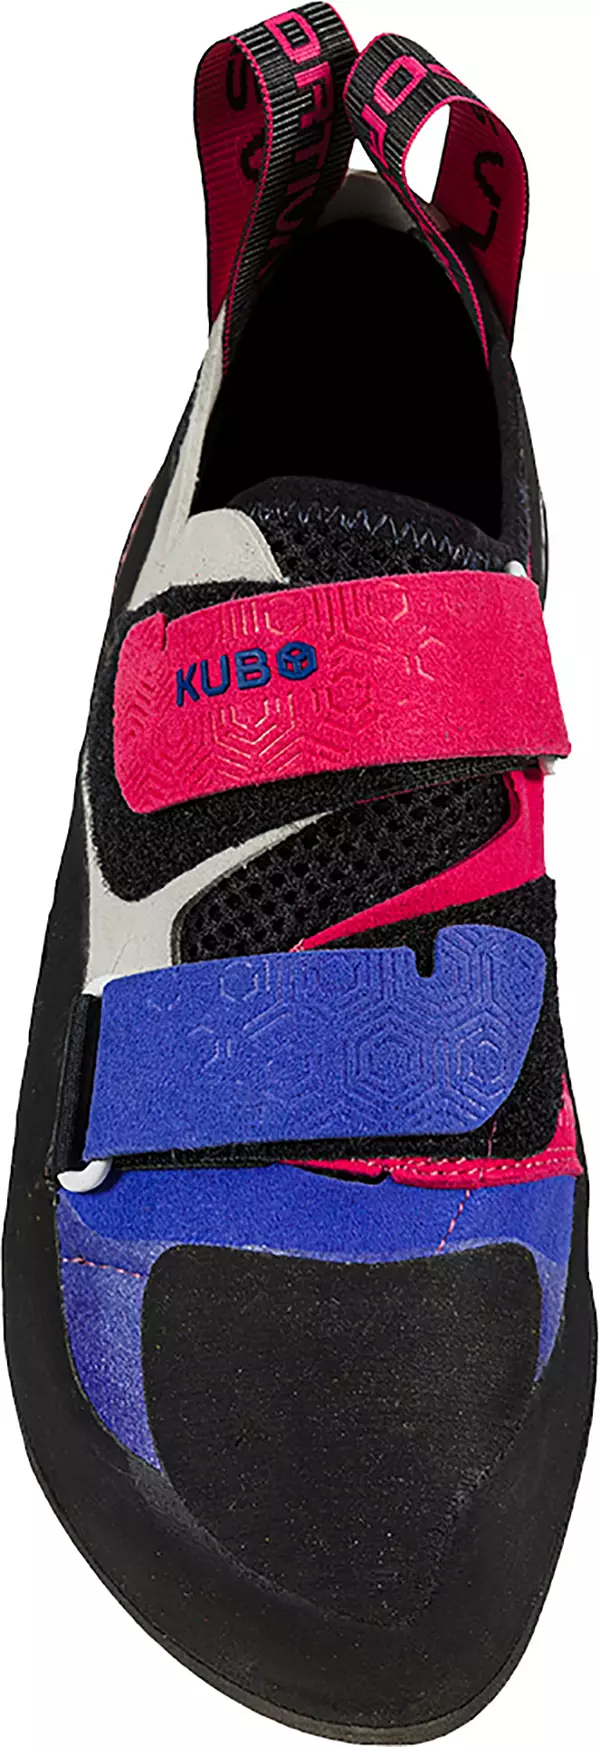 La Sportiva Women's Kubo Climbing Shoes